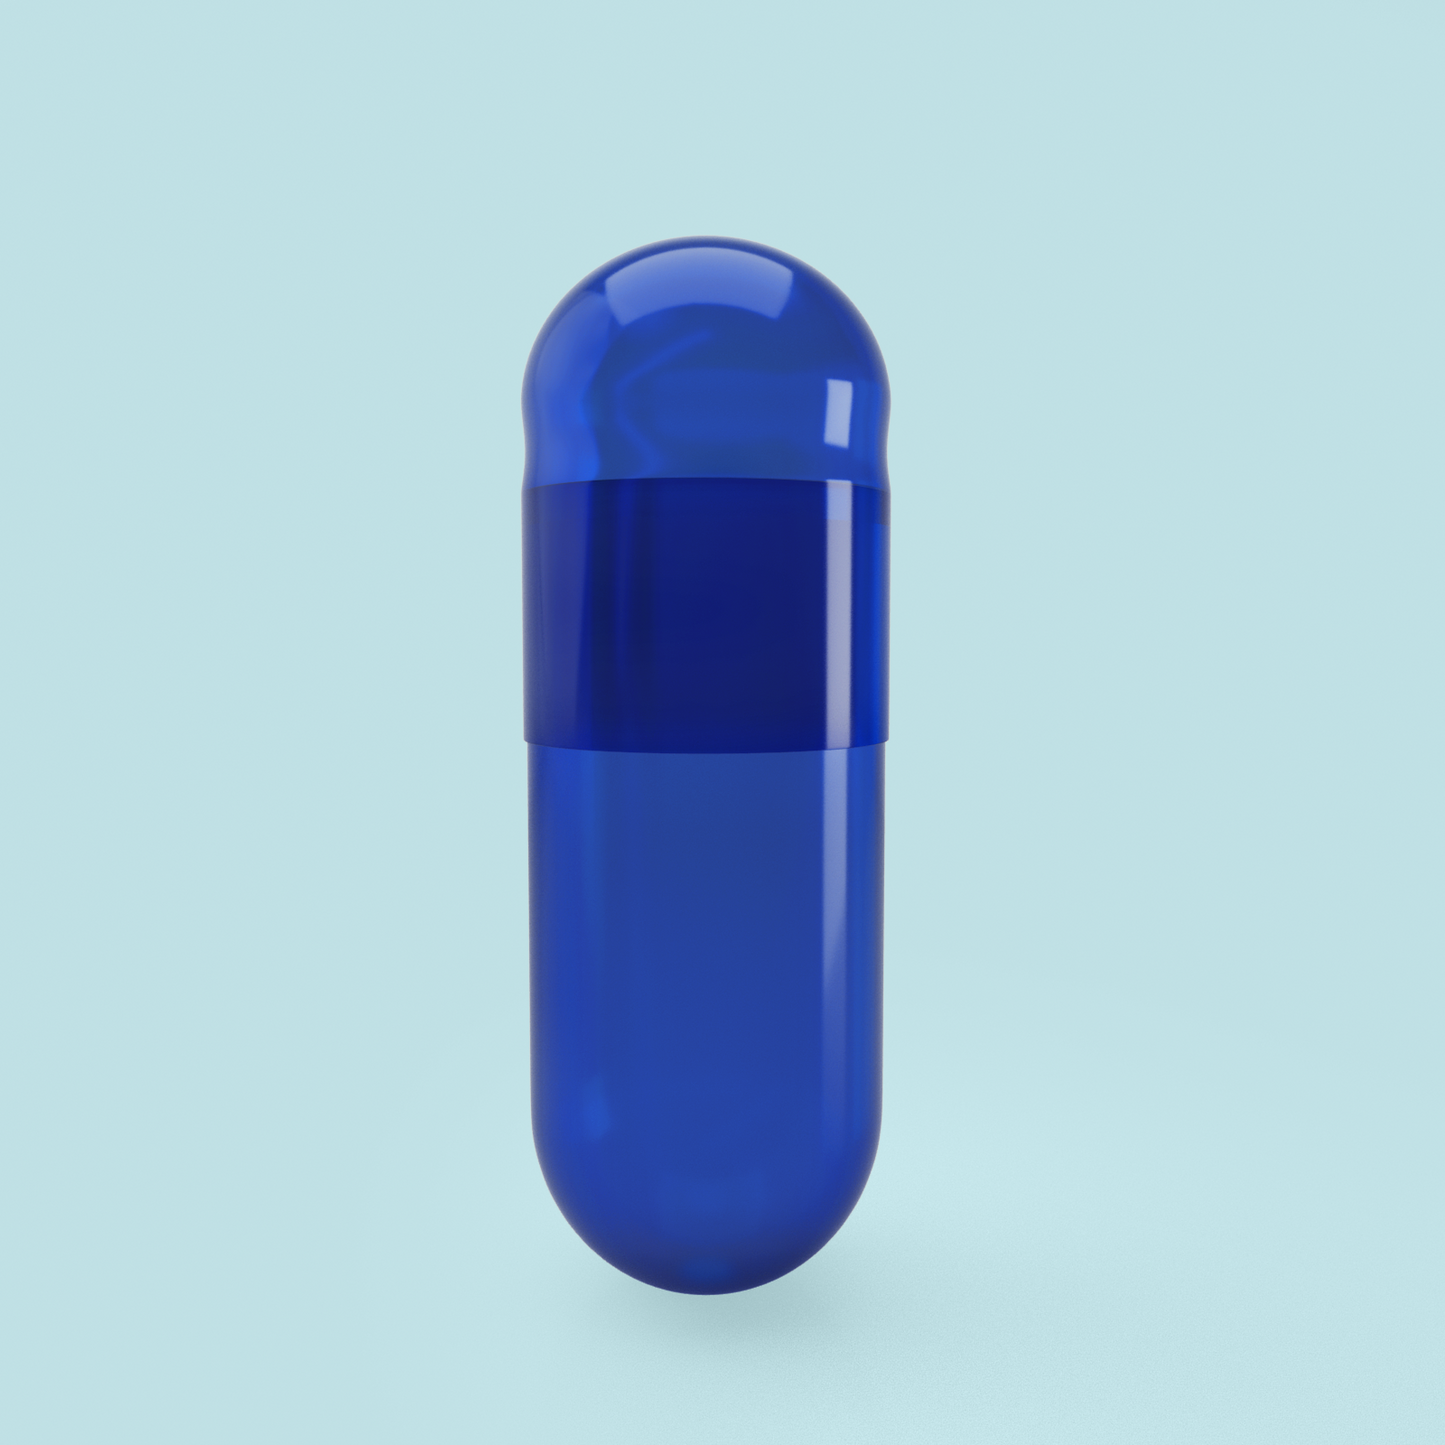 Titanium Dioxide (TiO2) Free - Colored Empty Gelatin Capsules Size 00 (Box of 75,000) - Blue